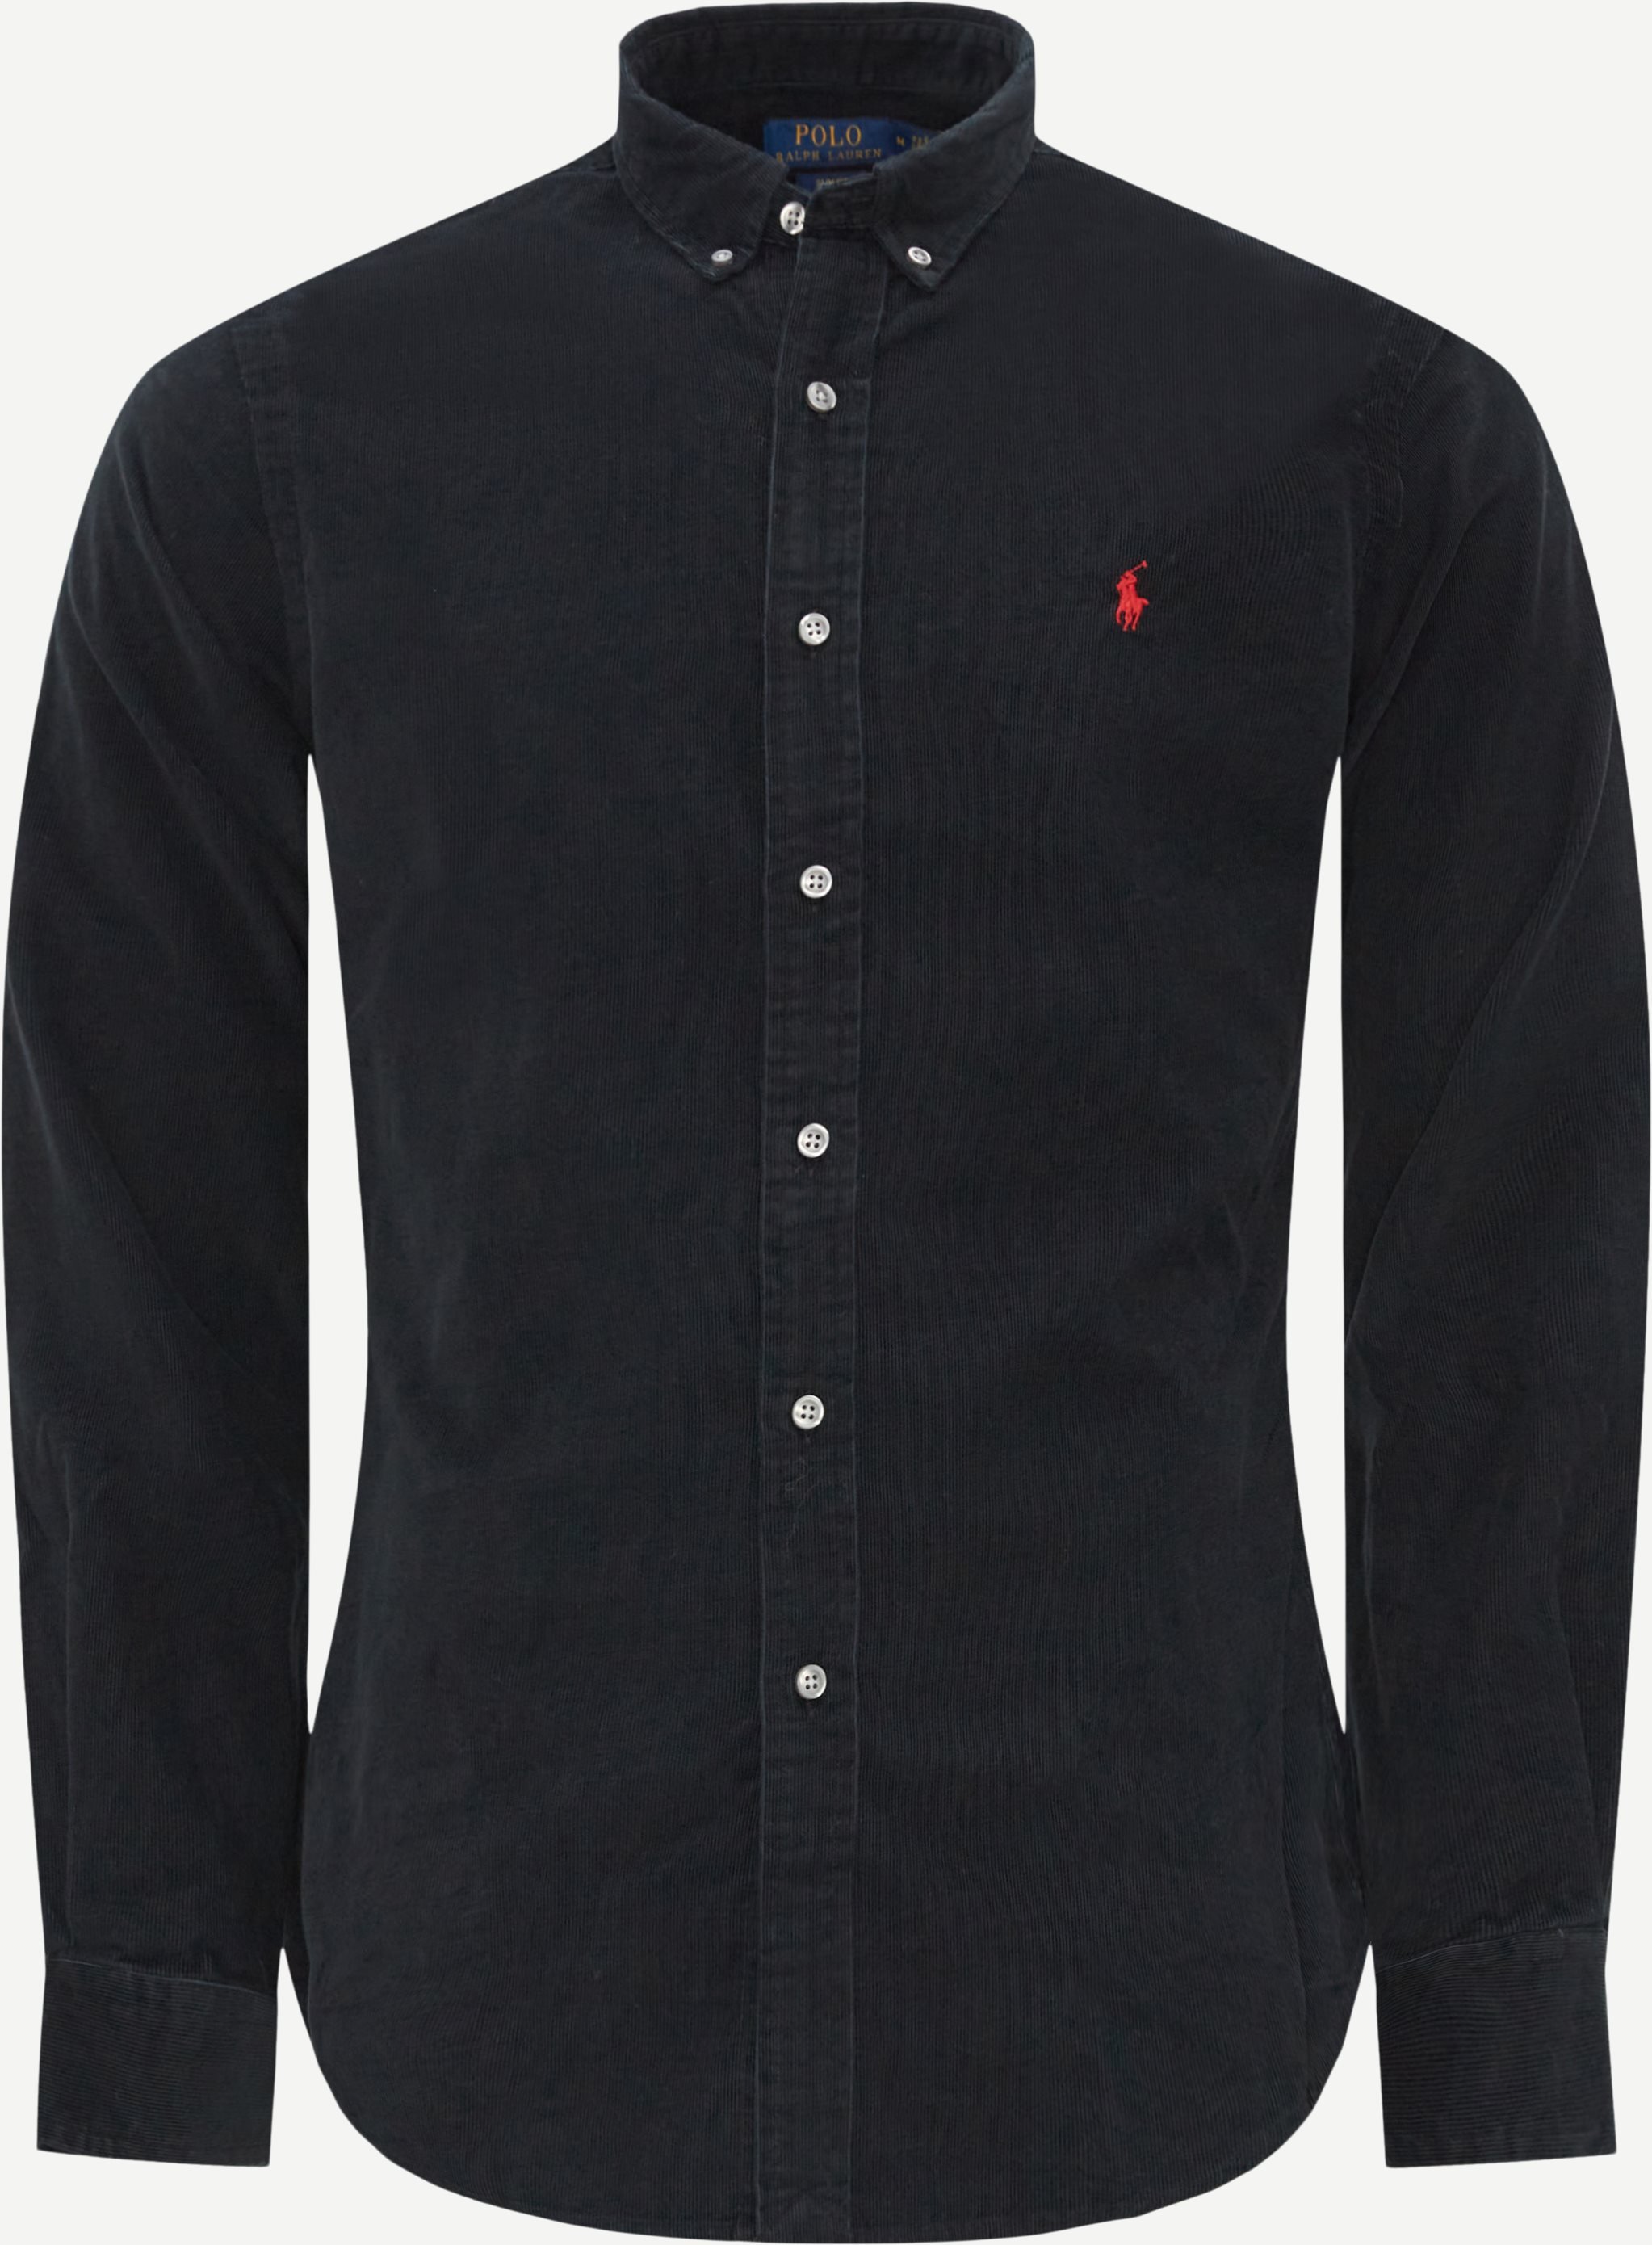 Polo Ralph Lauren Shirts 710818661 Black